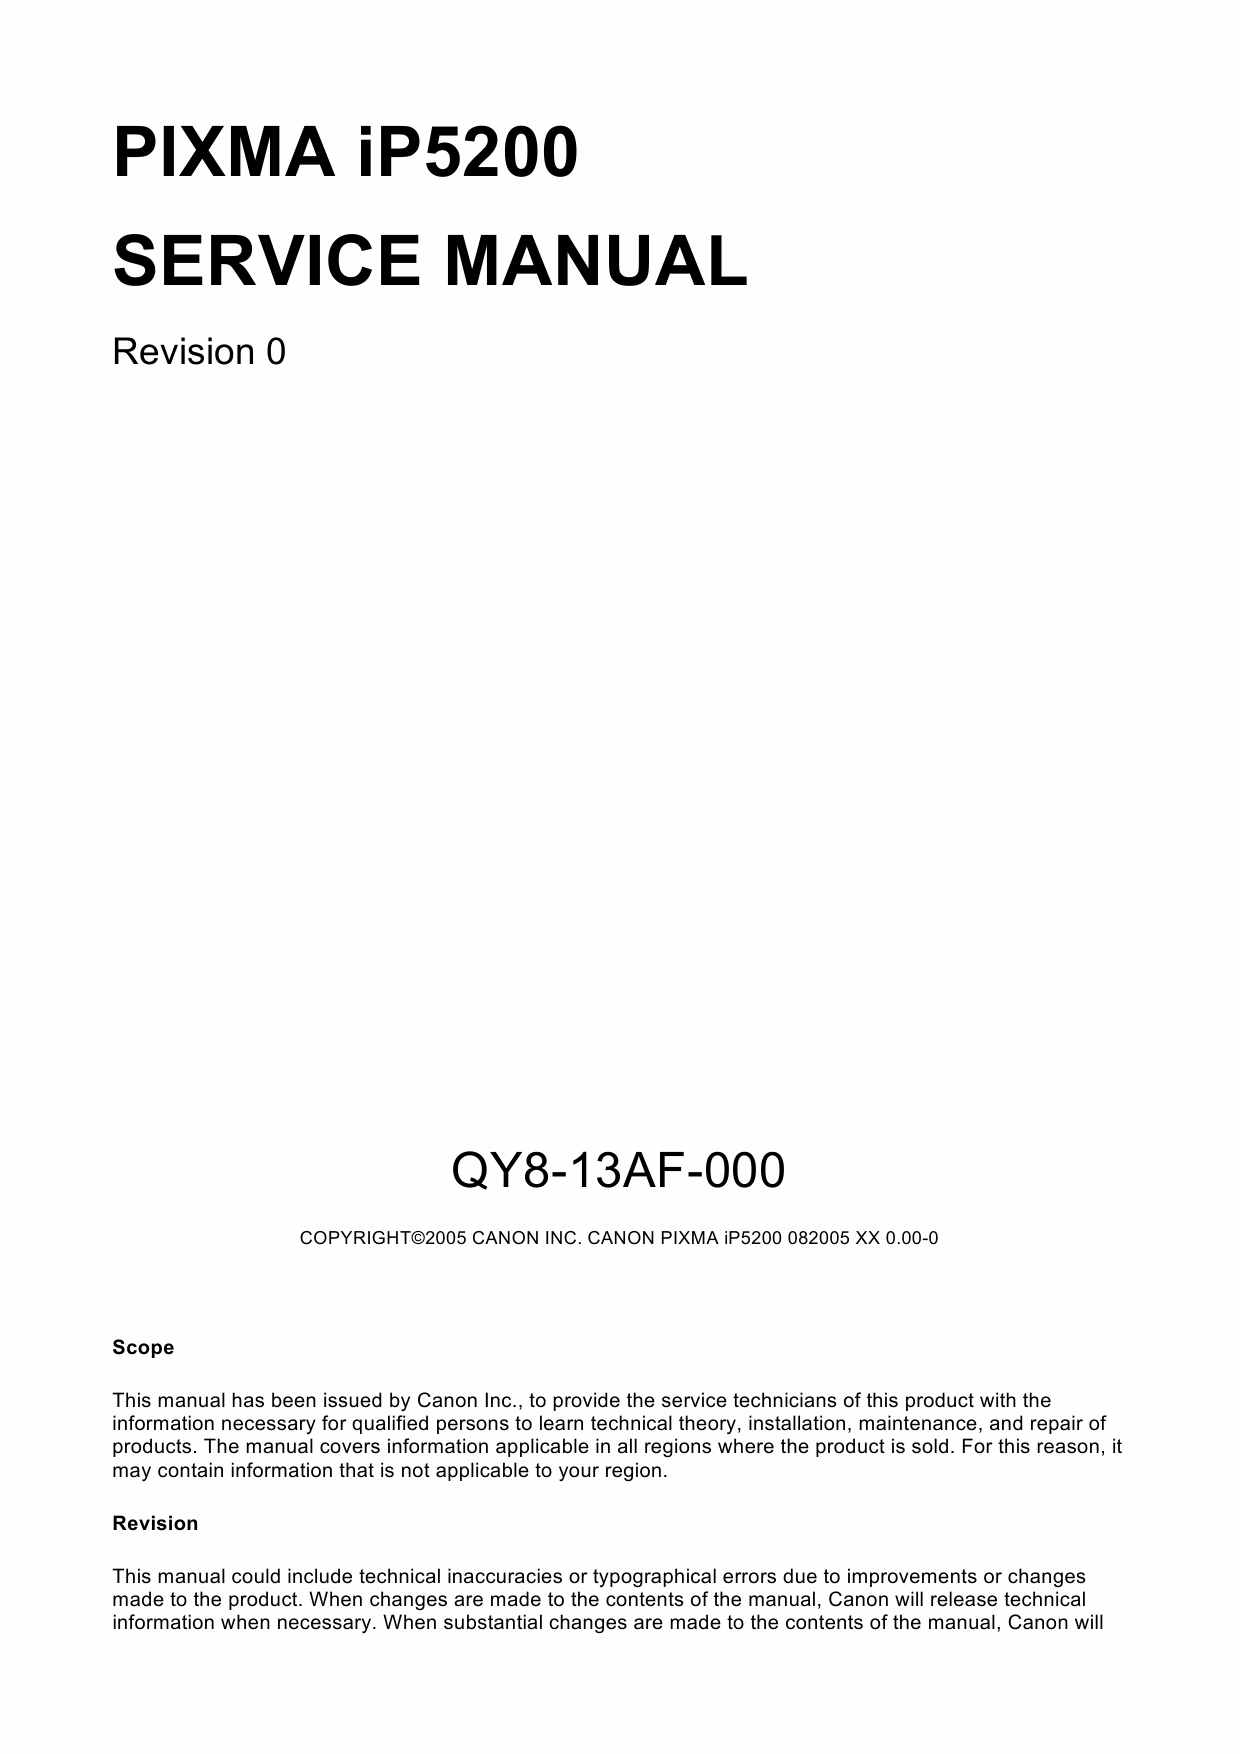 Canon PIXMA iP5200 Service Manual-1